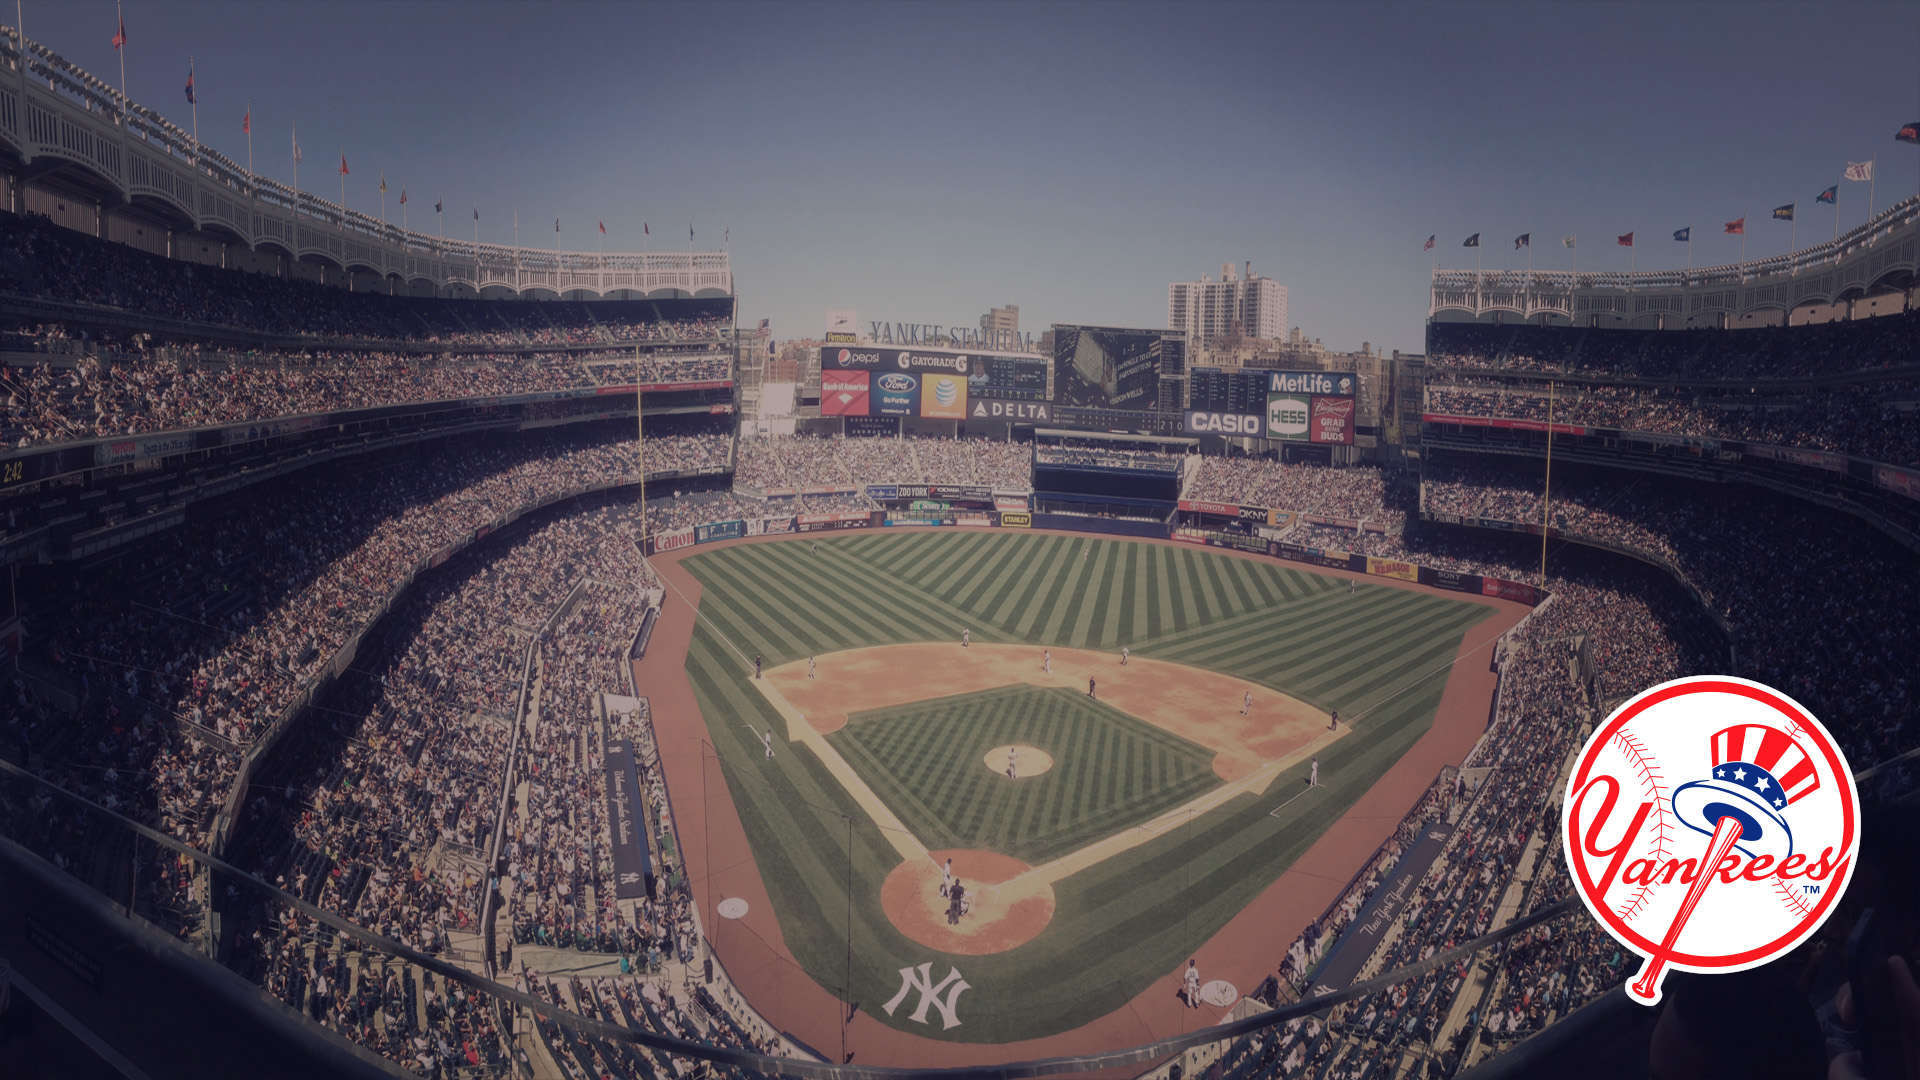 Now New York Yankees HD Wallpaper 1080p Read Description